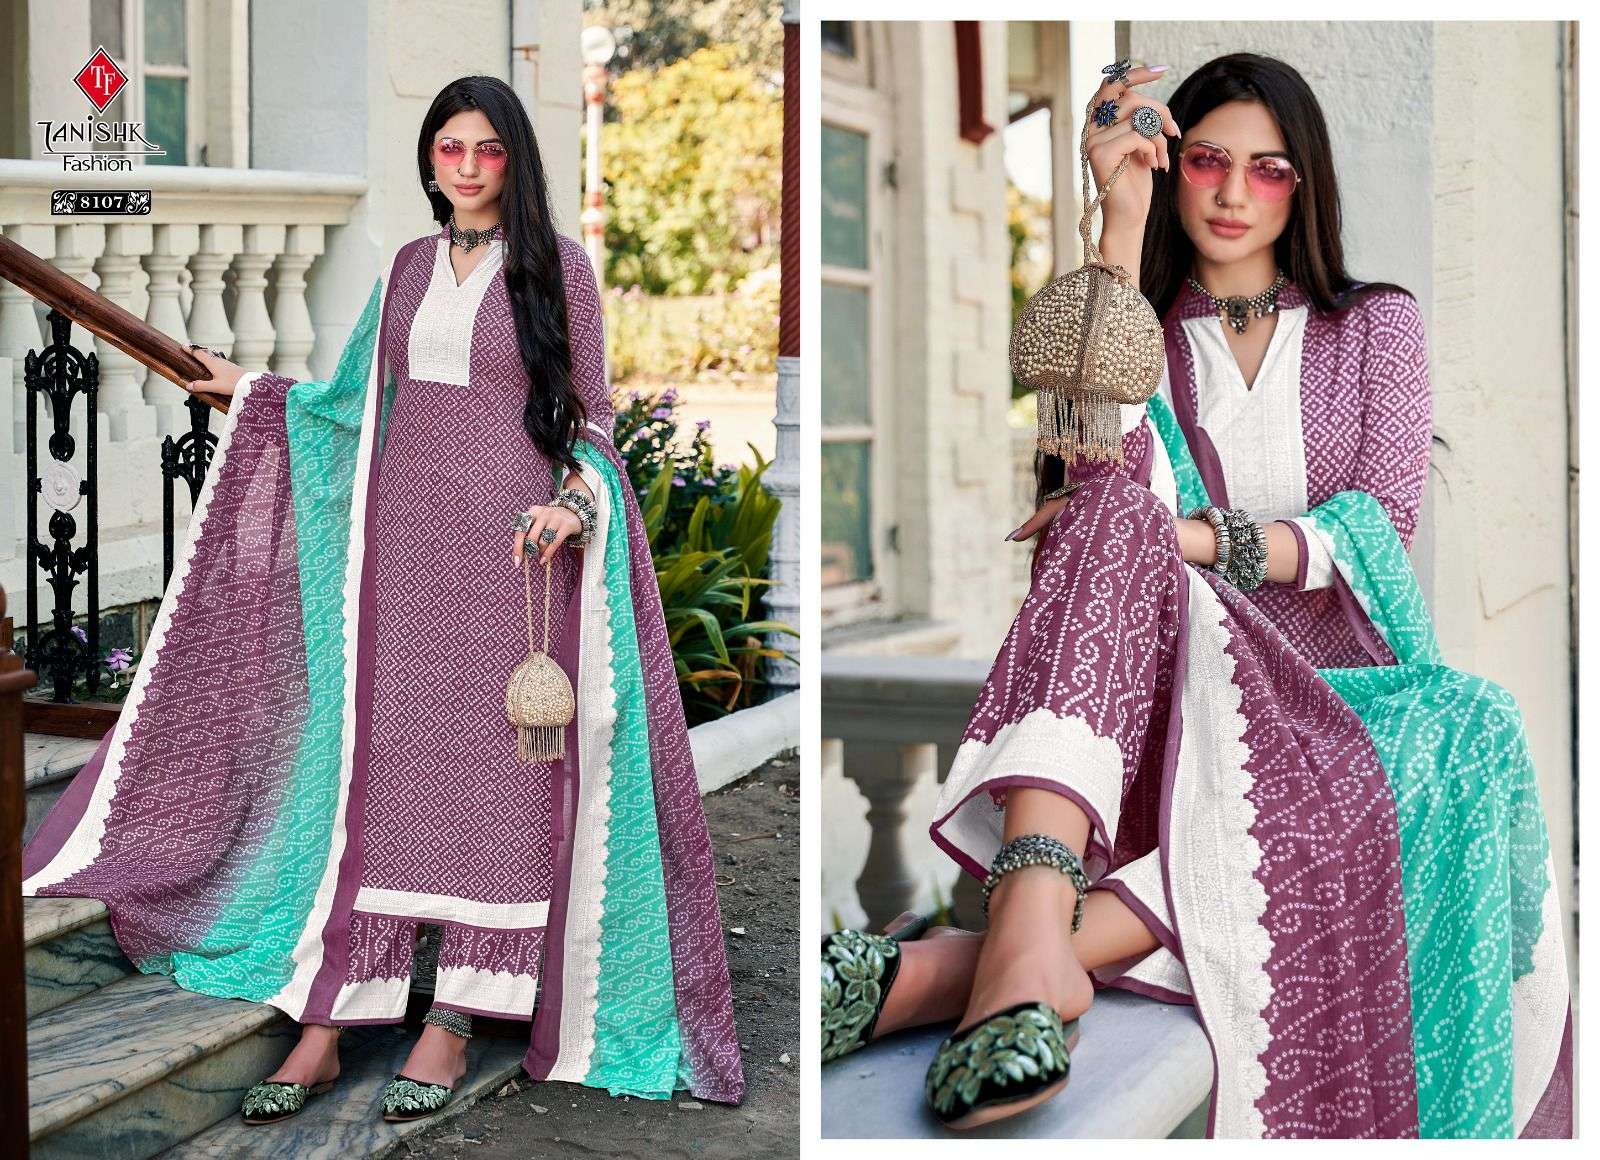 tanishk fashion bandhej vol-2 8101-8108 series unstich designer salwar kameez dress material new catalogue surat